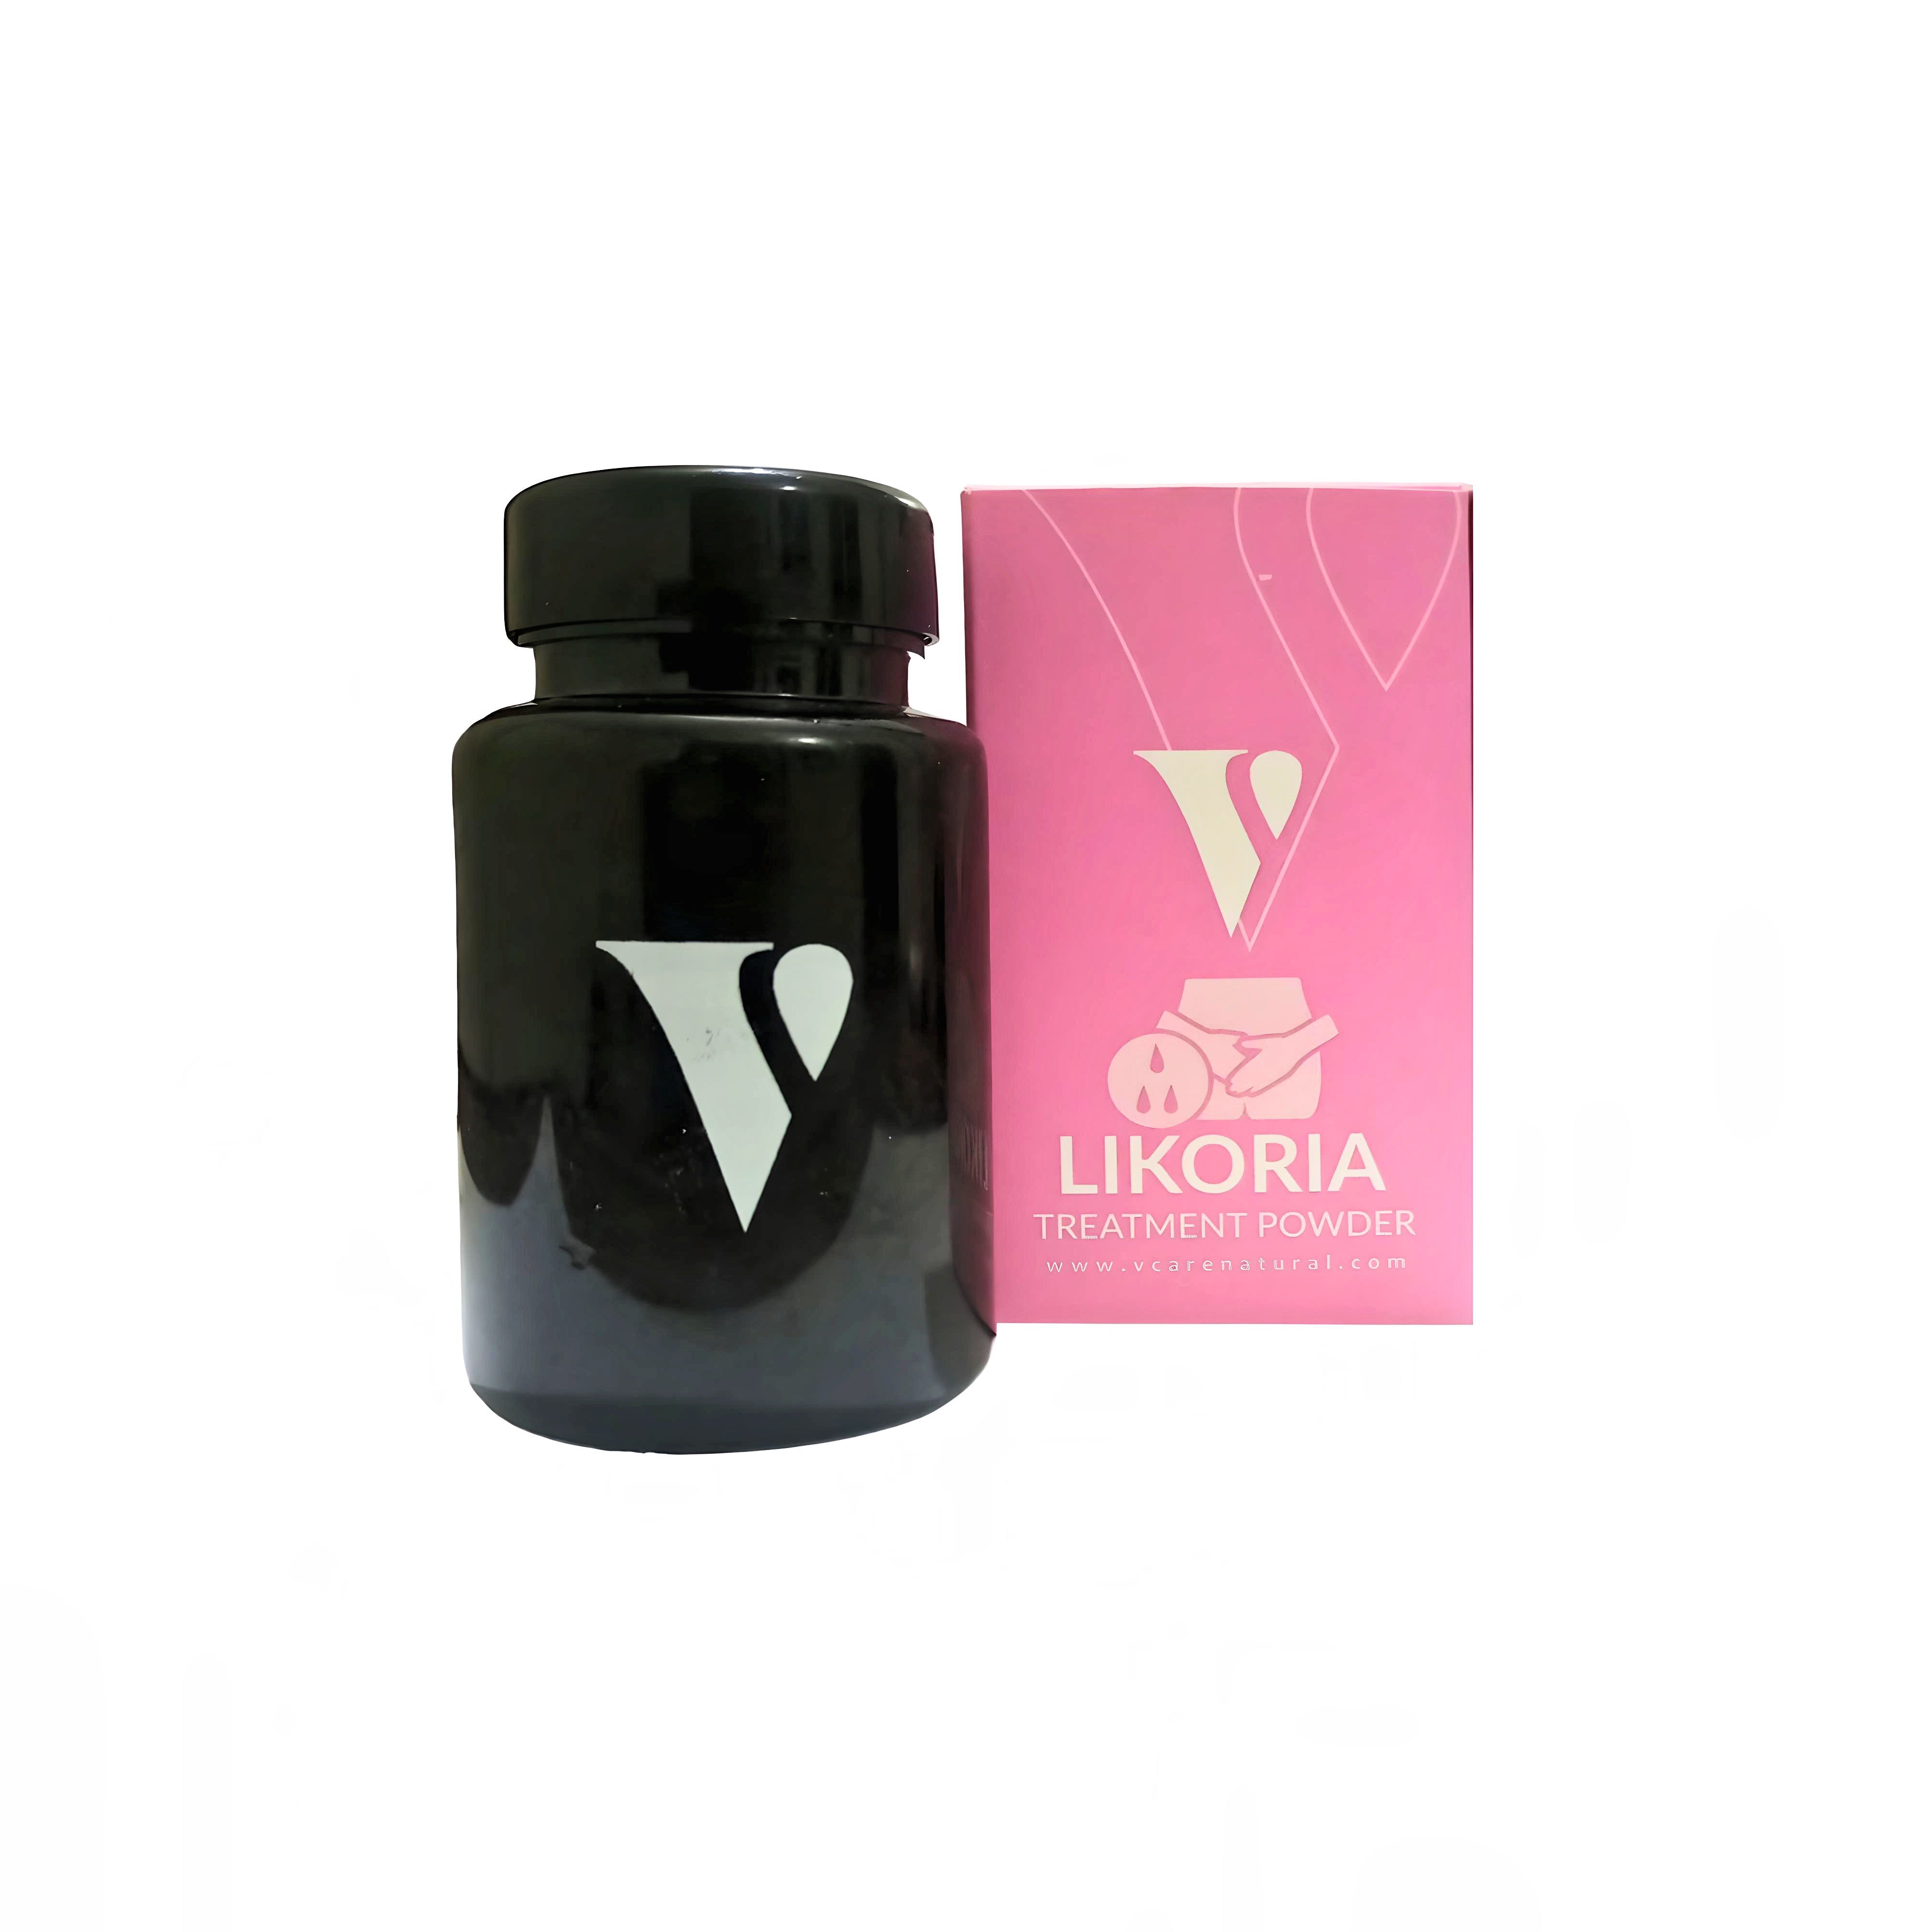 Lekoria Herbal Treatment Powder Eatable - 70gm Vcare Natural www.vcarenatural.com